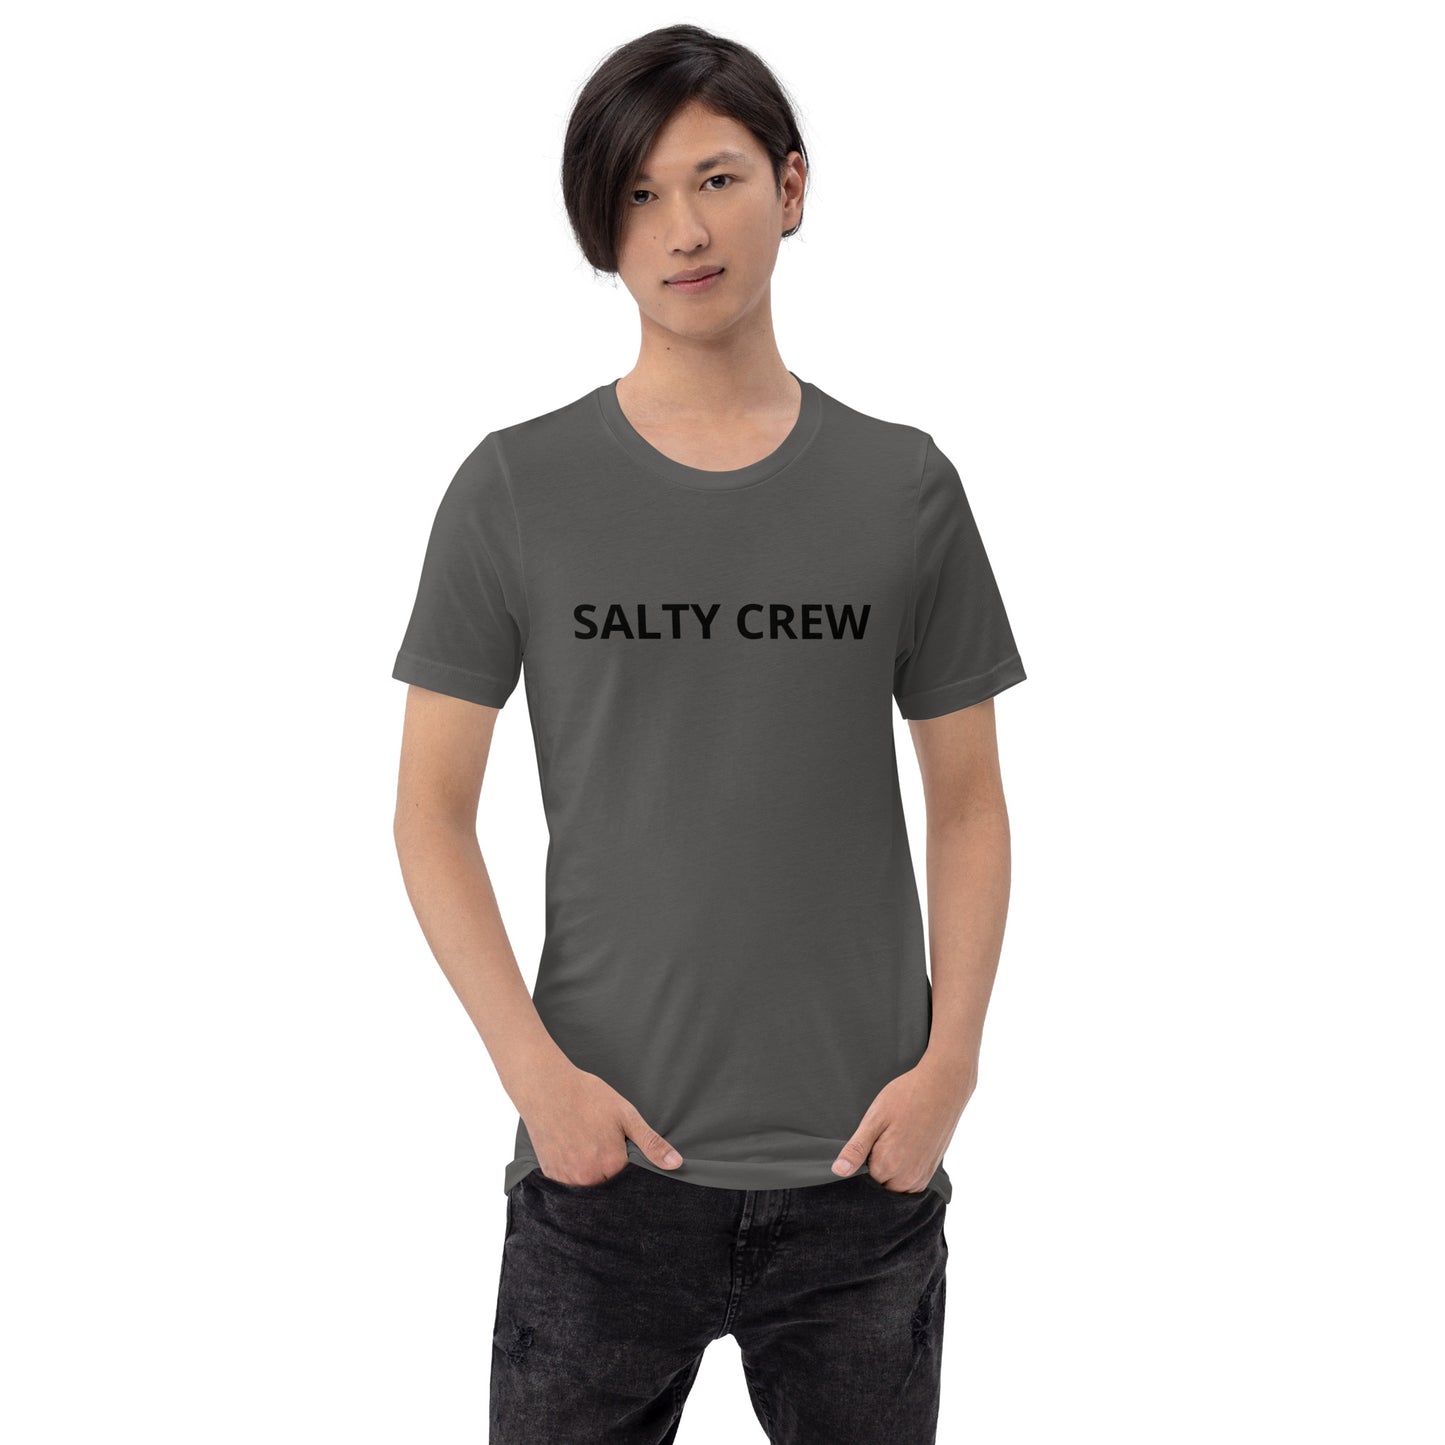 Salty Crew Unisex T-Shirt